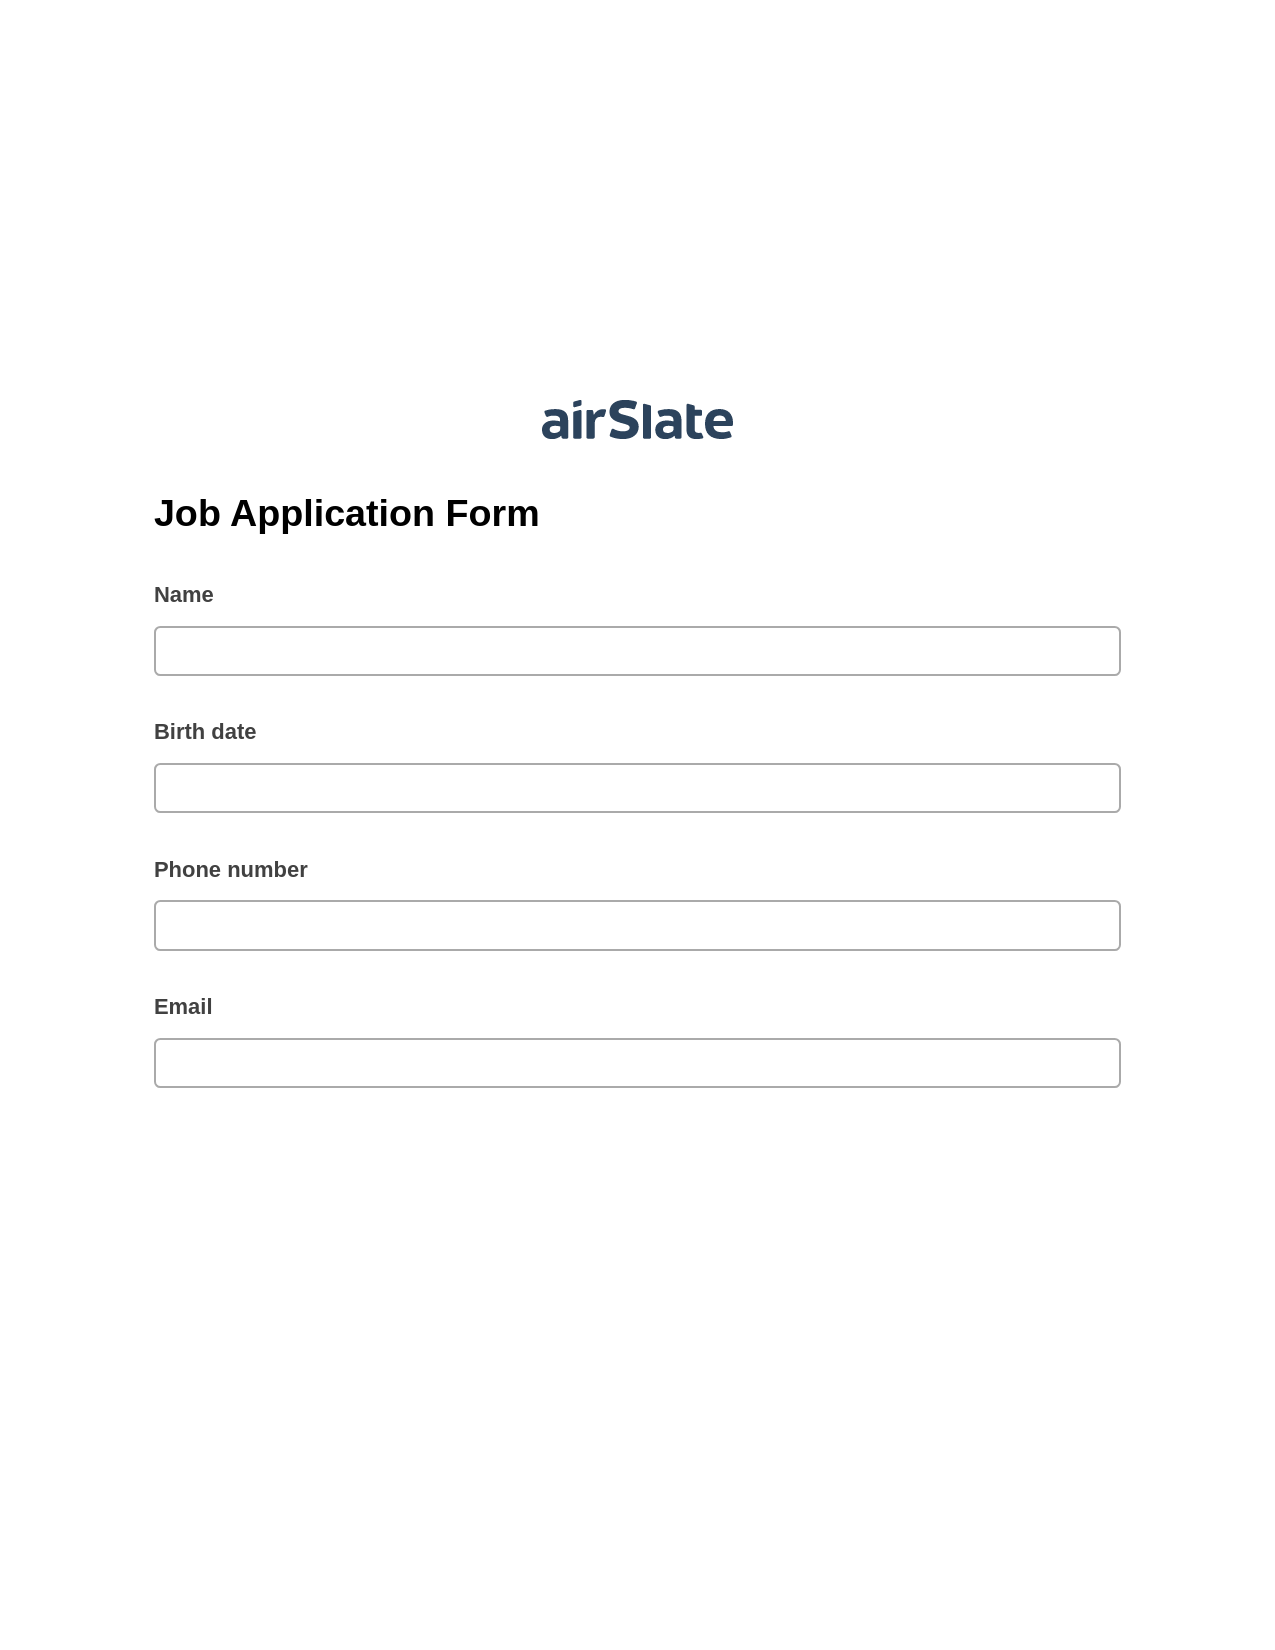 Job Application Form Pre-fill from CSV File Bot, SendGrid send Campaign bot, Export to Salesforce Bot